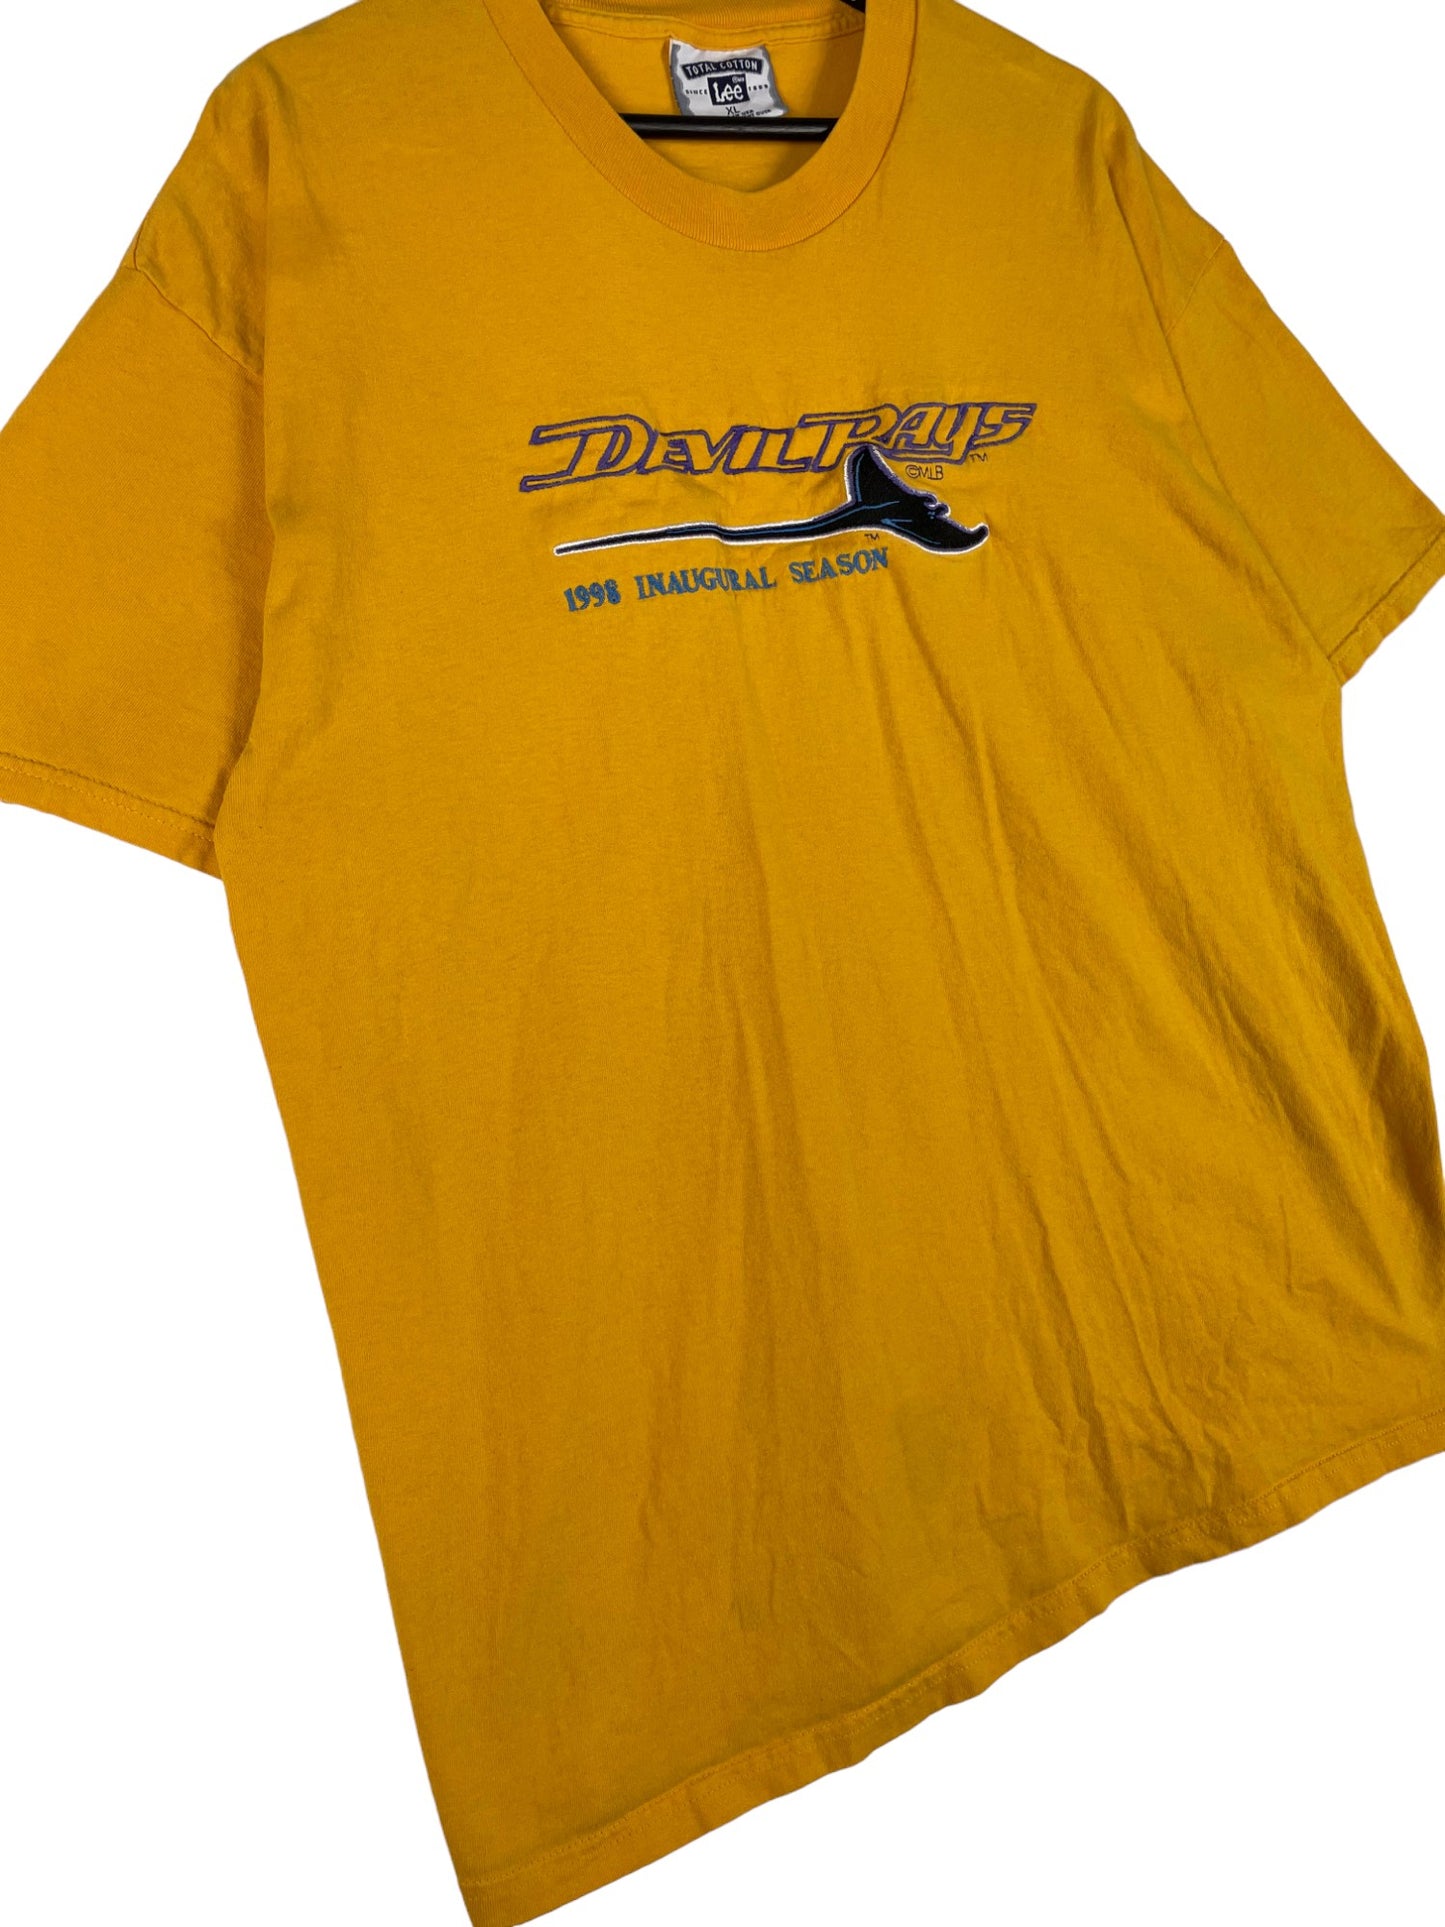 Devils Rays T-Shirt 1998